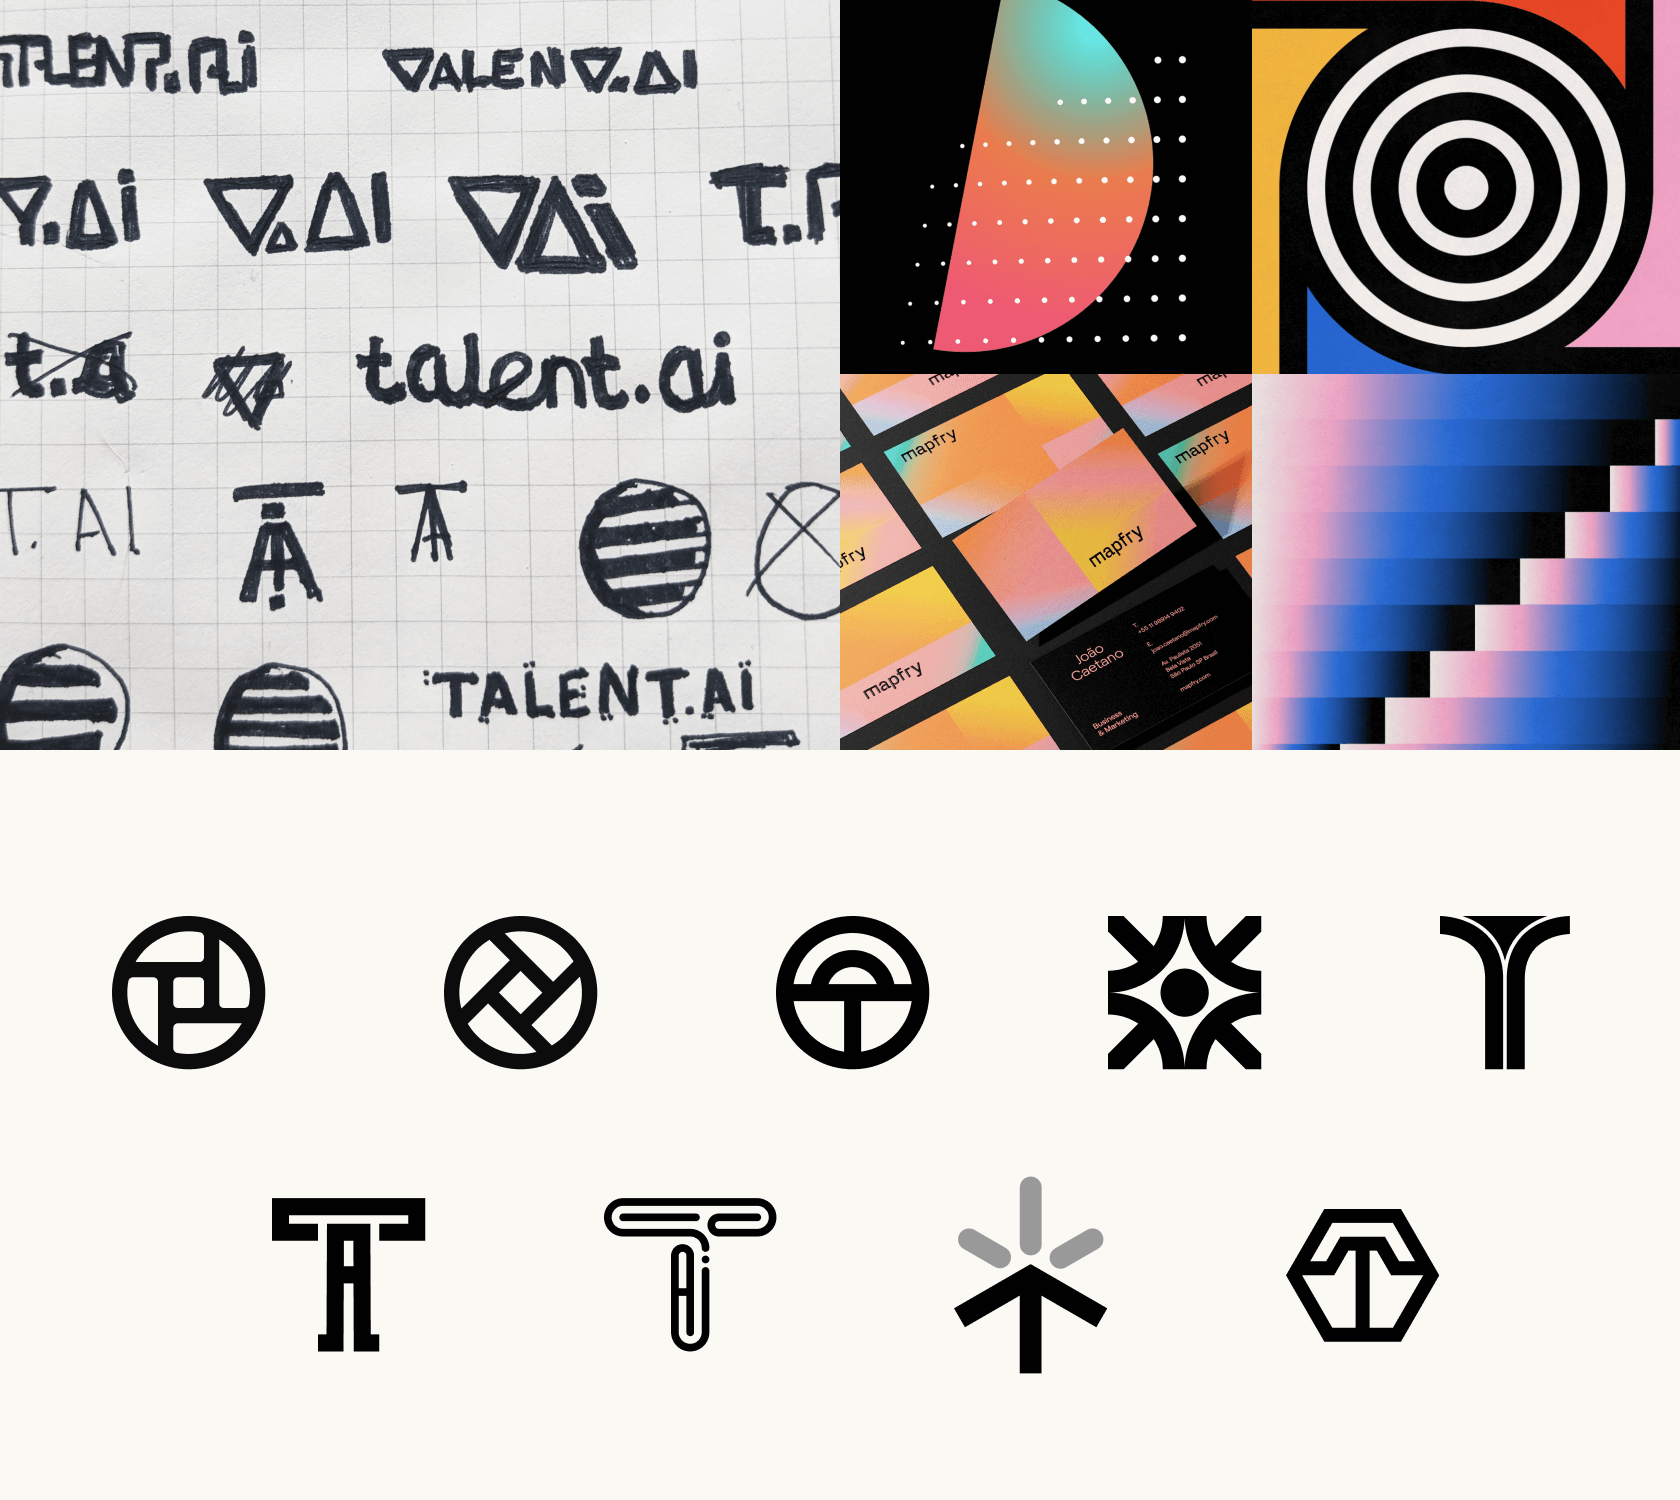 Exploring different designs for talent.ai logo